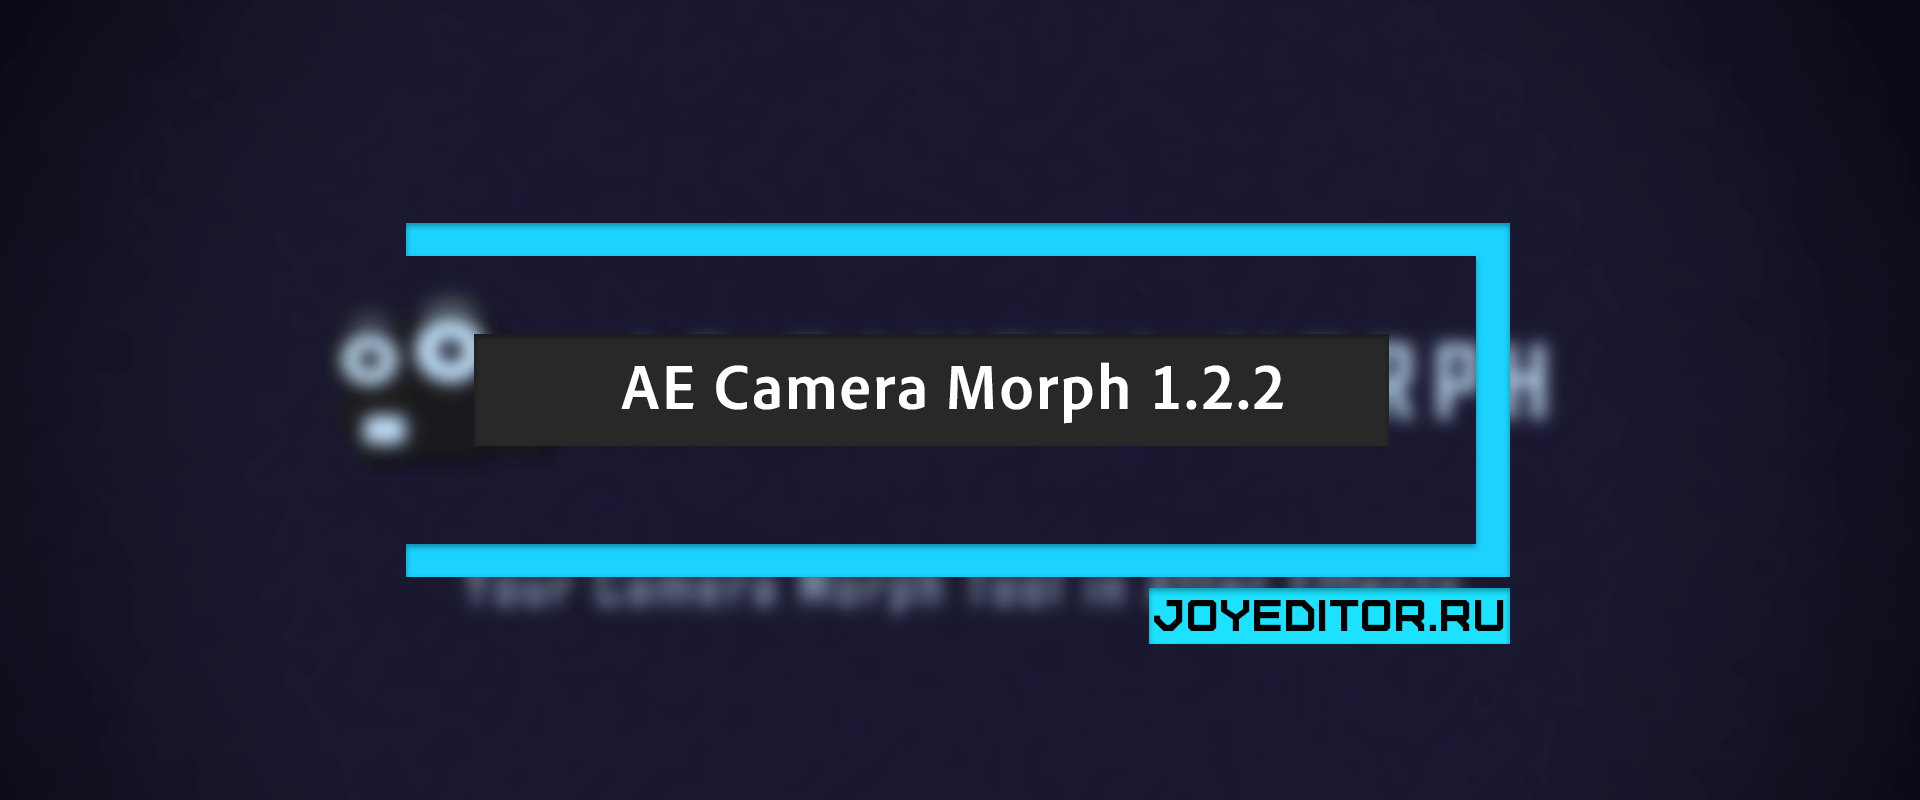 AE Camera Morph 1.2.2